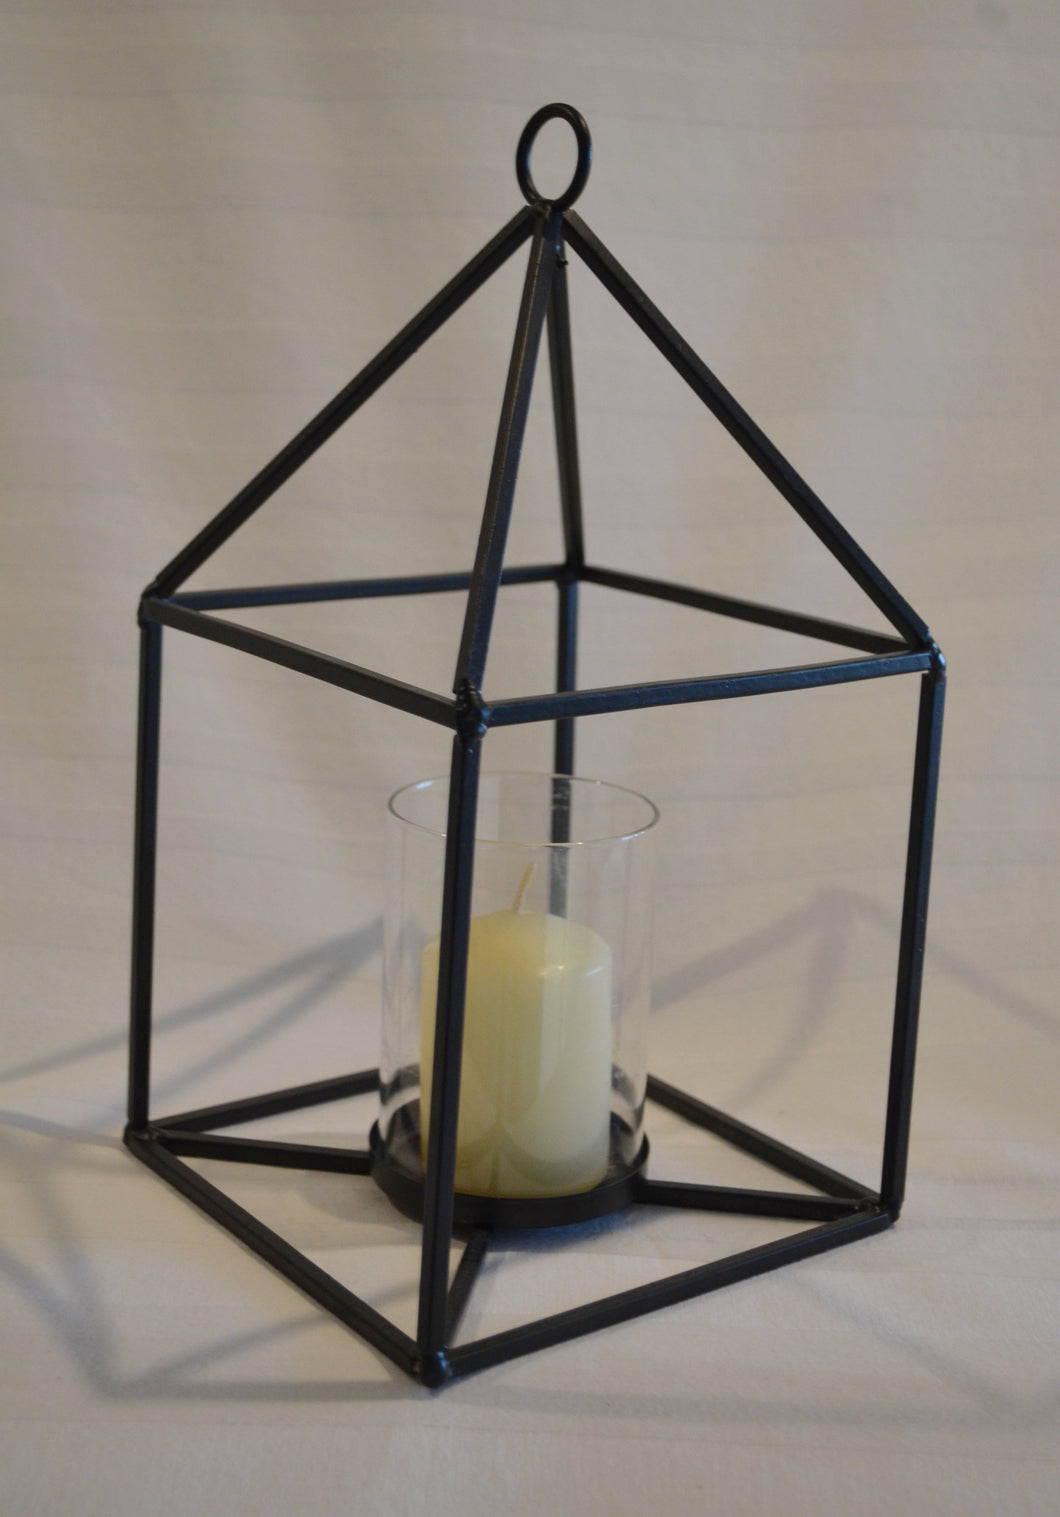 'Pyramid' wrought iron candle holder